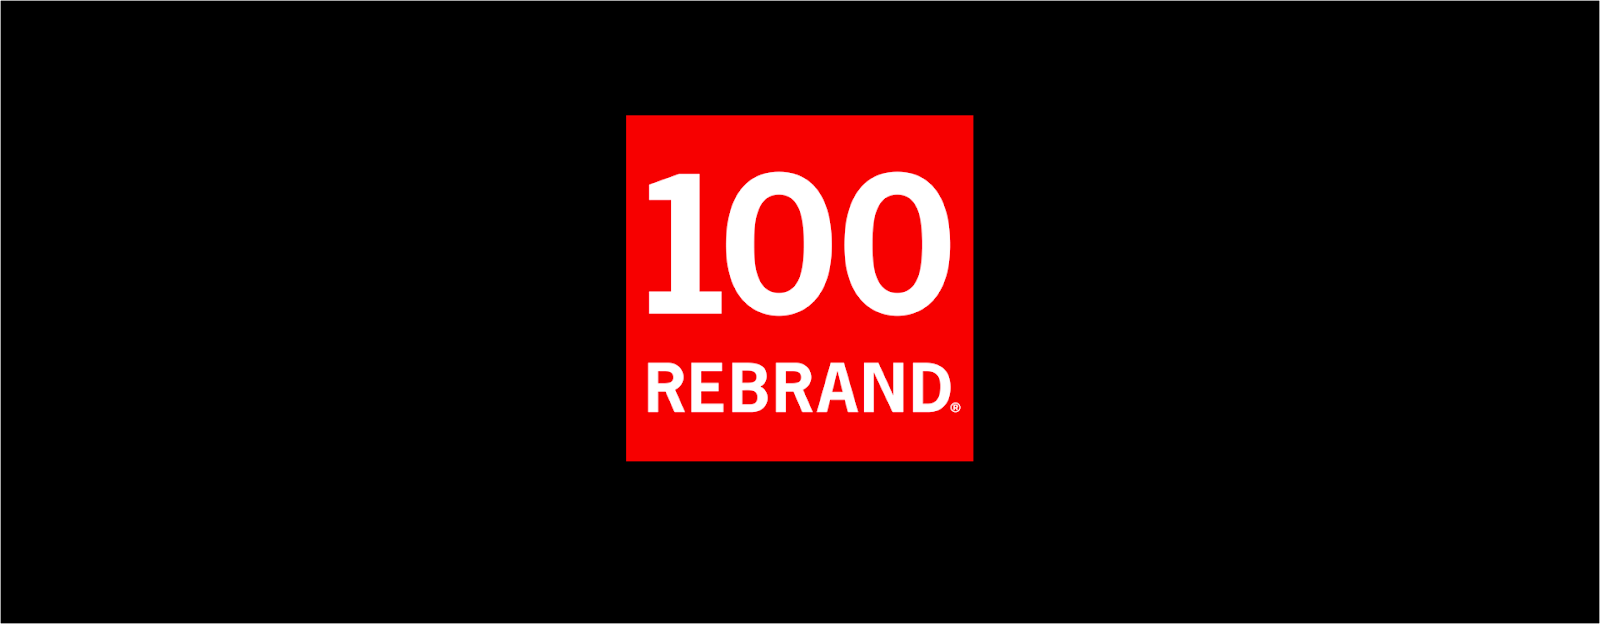 rebrand 100